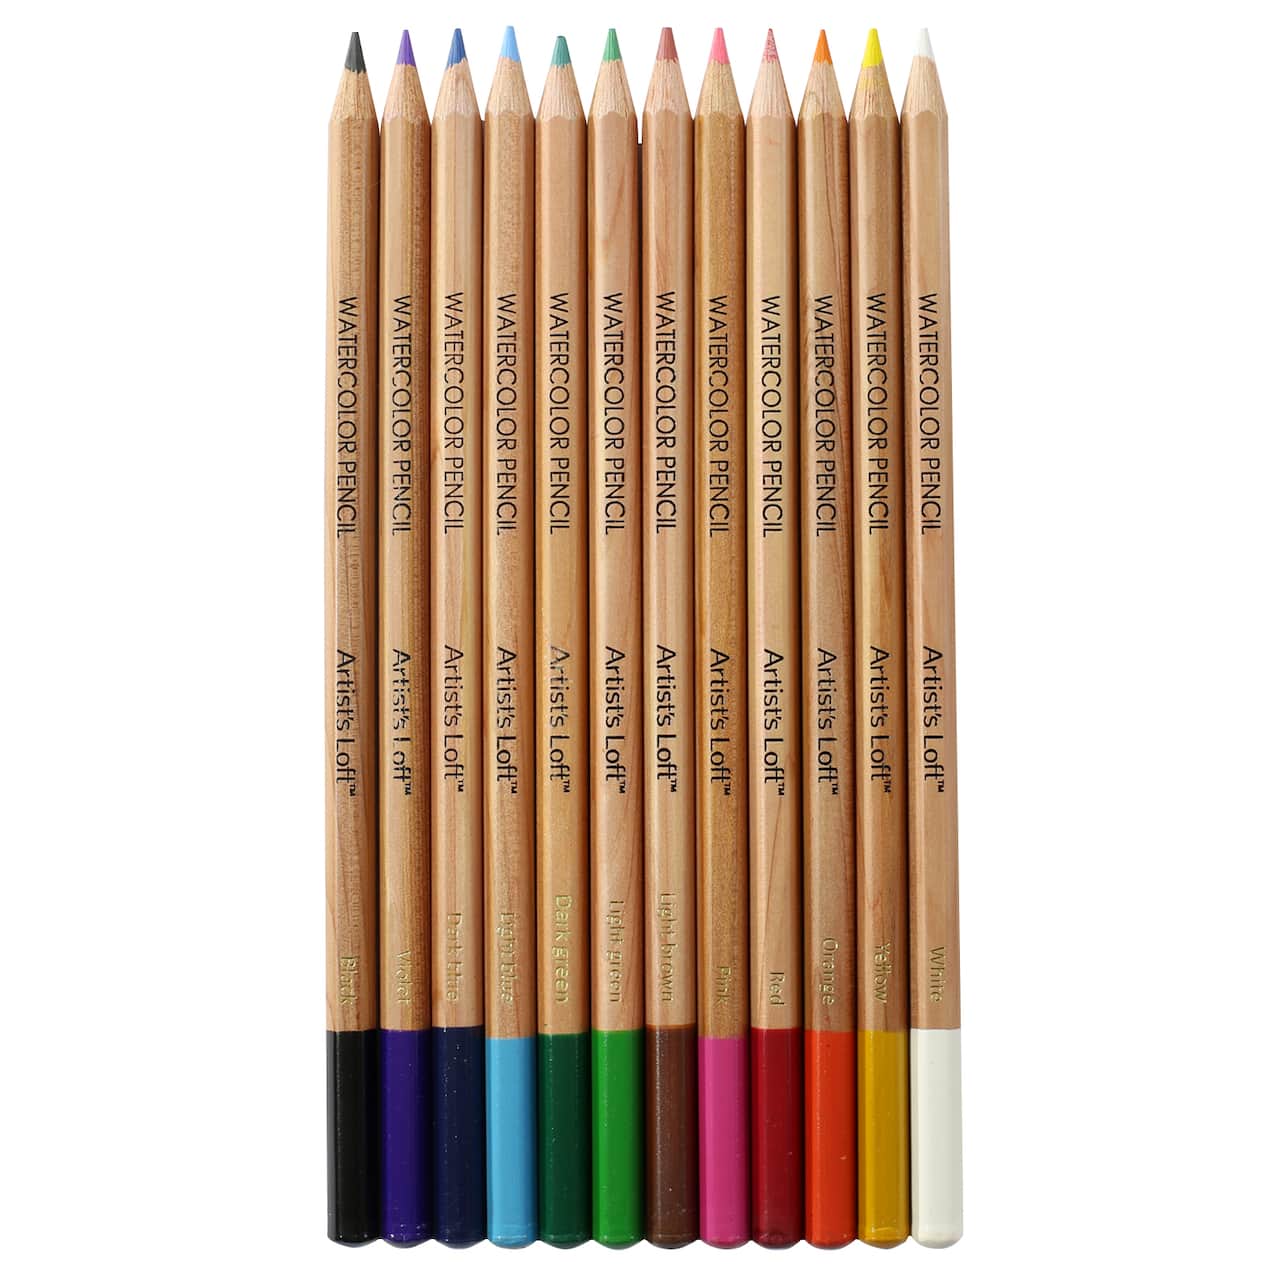 12 Packs: 12 ct. (144 total) Watercolor Pencil Set by Artist's Loft™